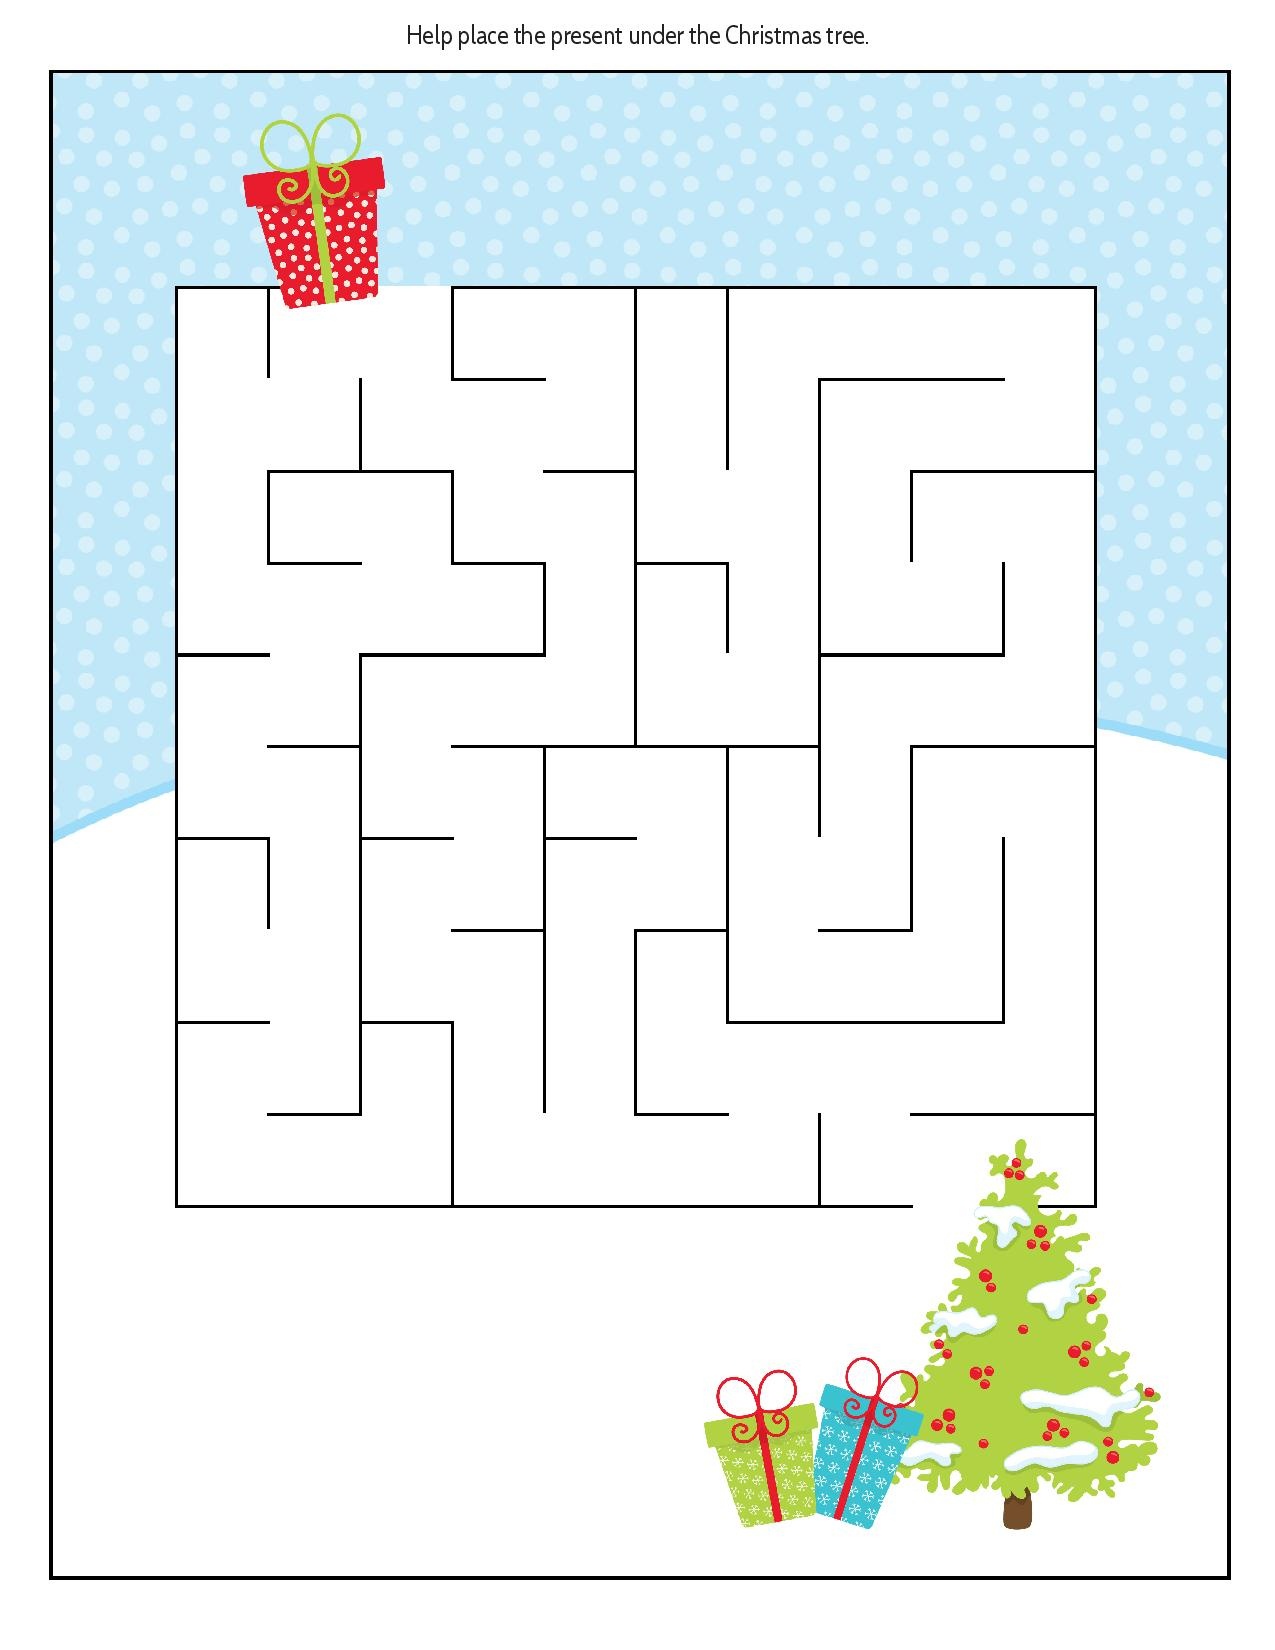 Free Educational Printable Christmas Puzzle Pack - Real And Quirky - Free Printable Christmas Puzzles